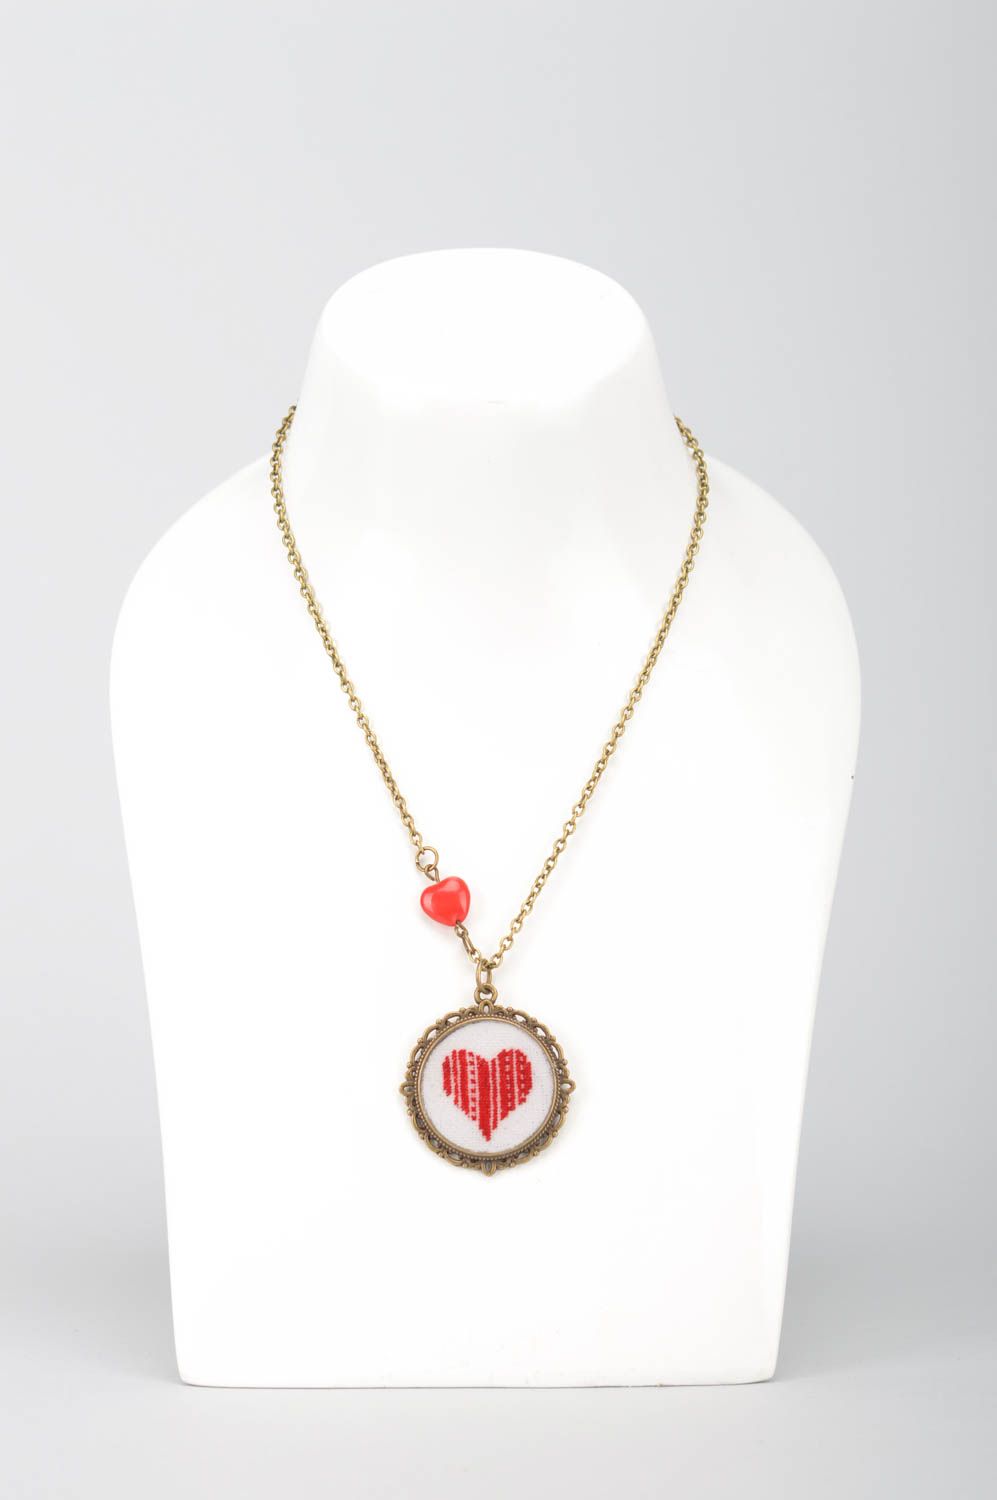 Handmade jewellery pendant necklace chain necklace fashion accessories gift idea photo 1